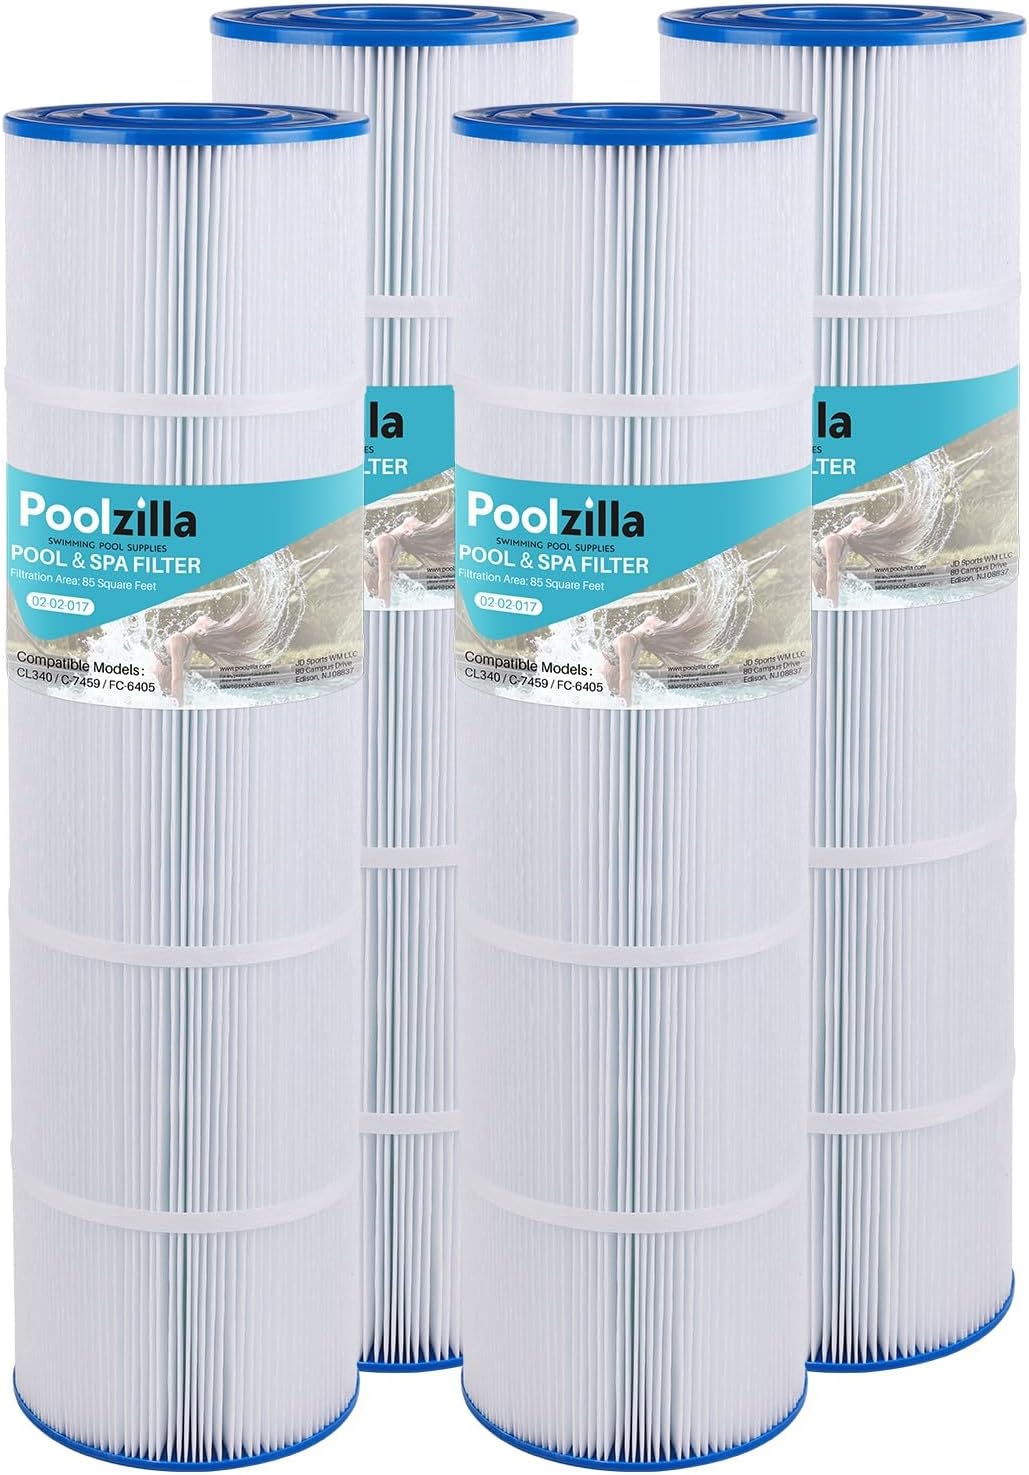 Poolzilla (4 Pack) Replacement Pool Filter Cartridge for Unicel C-7459, Jandy CL 340, PJAN85, Filbur FC-6405, FC-0800, A0557900, R0554500, Aladdin 18504, APCC7352